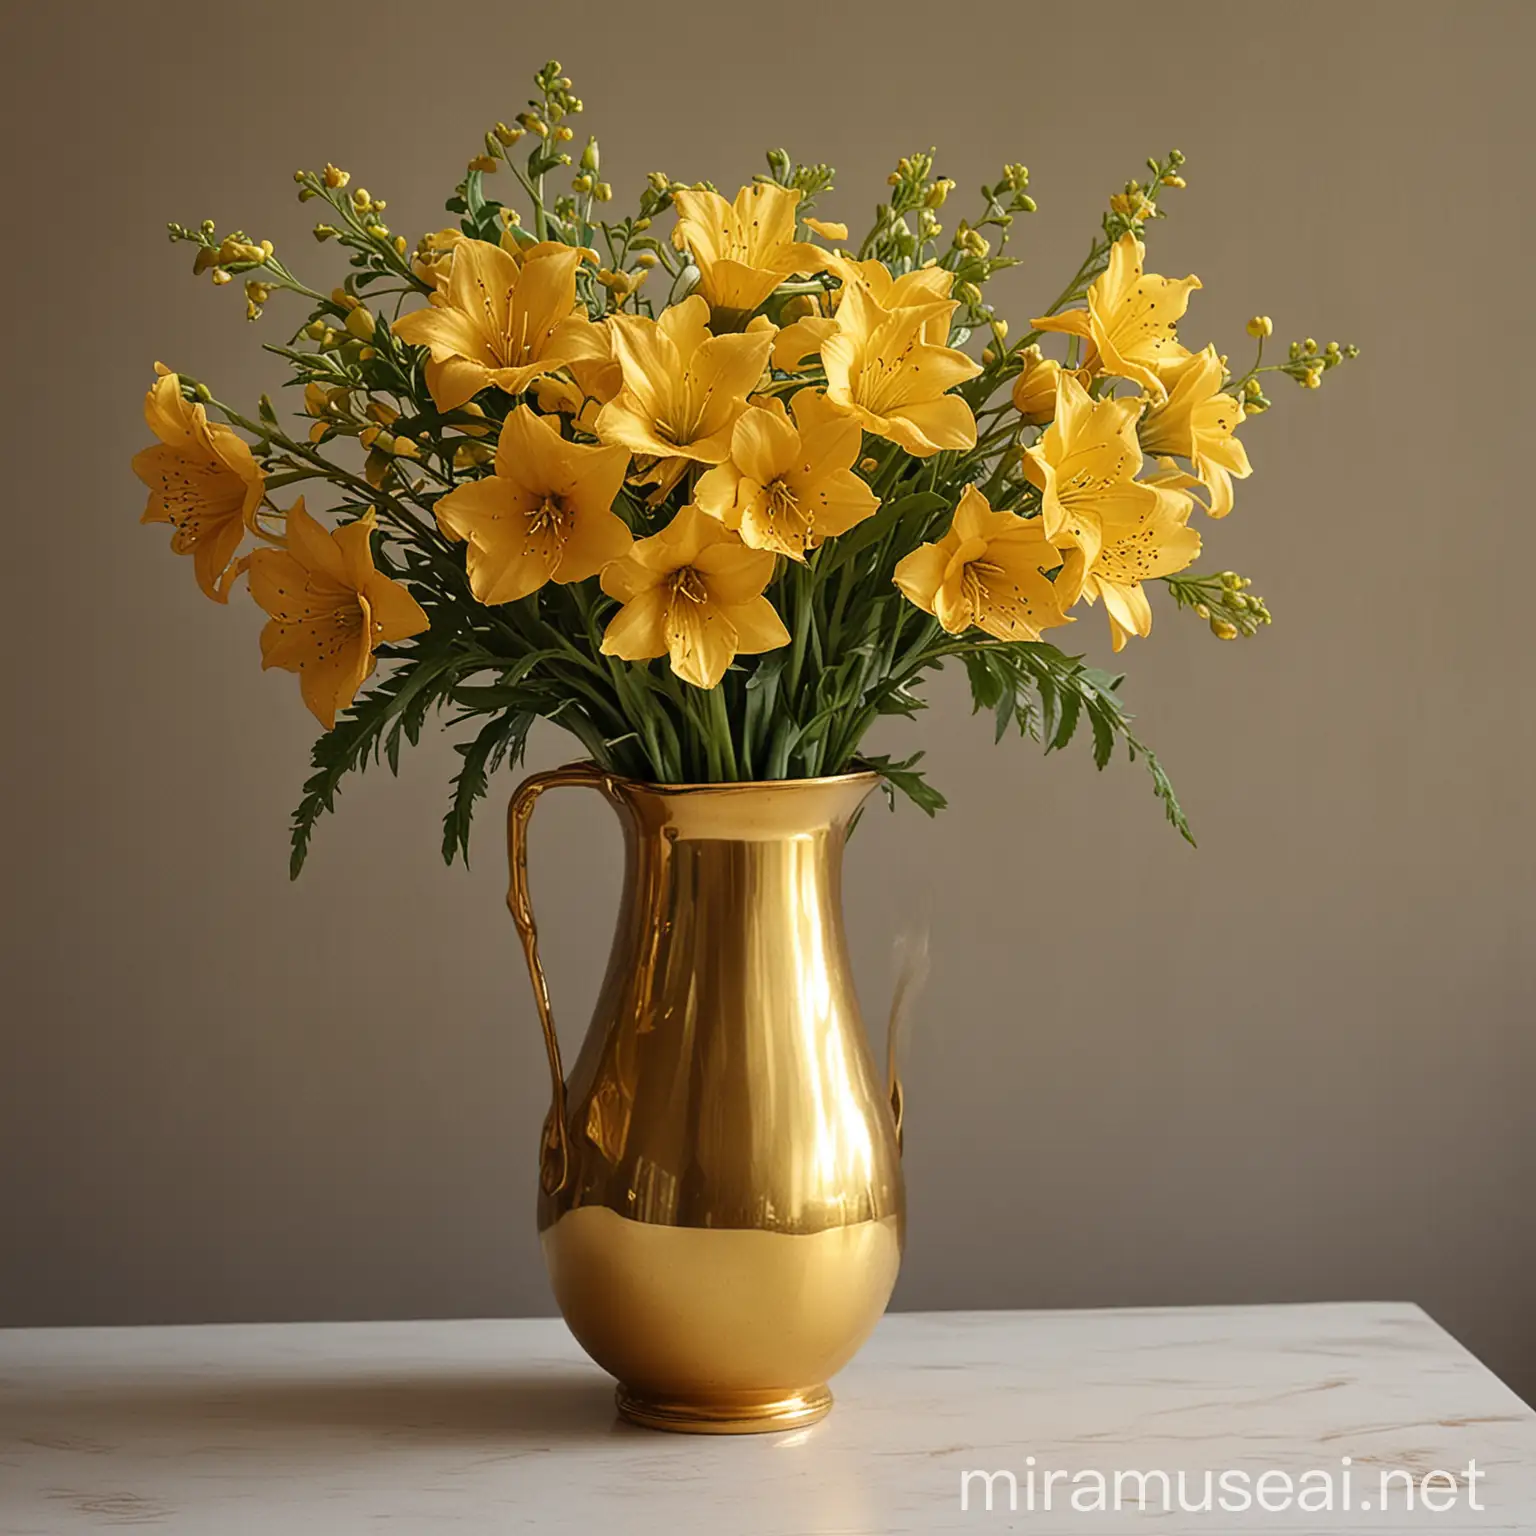 a golden vase flower's picture